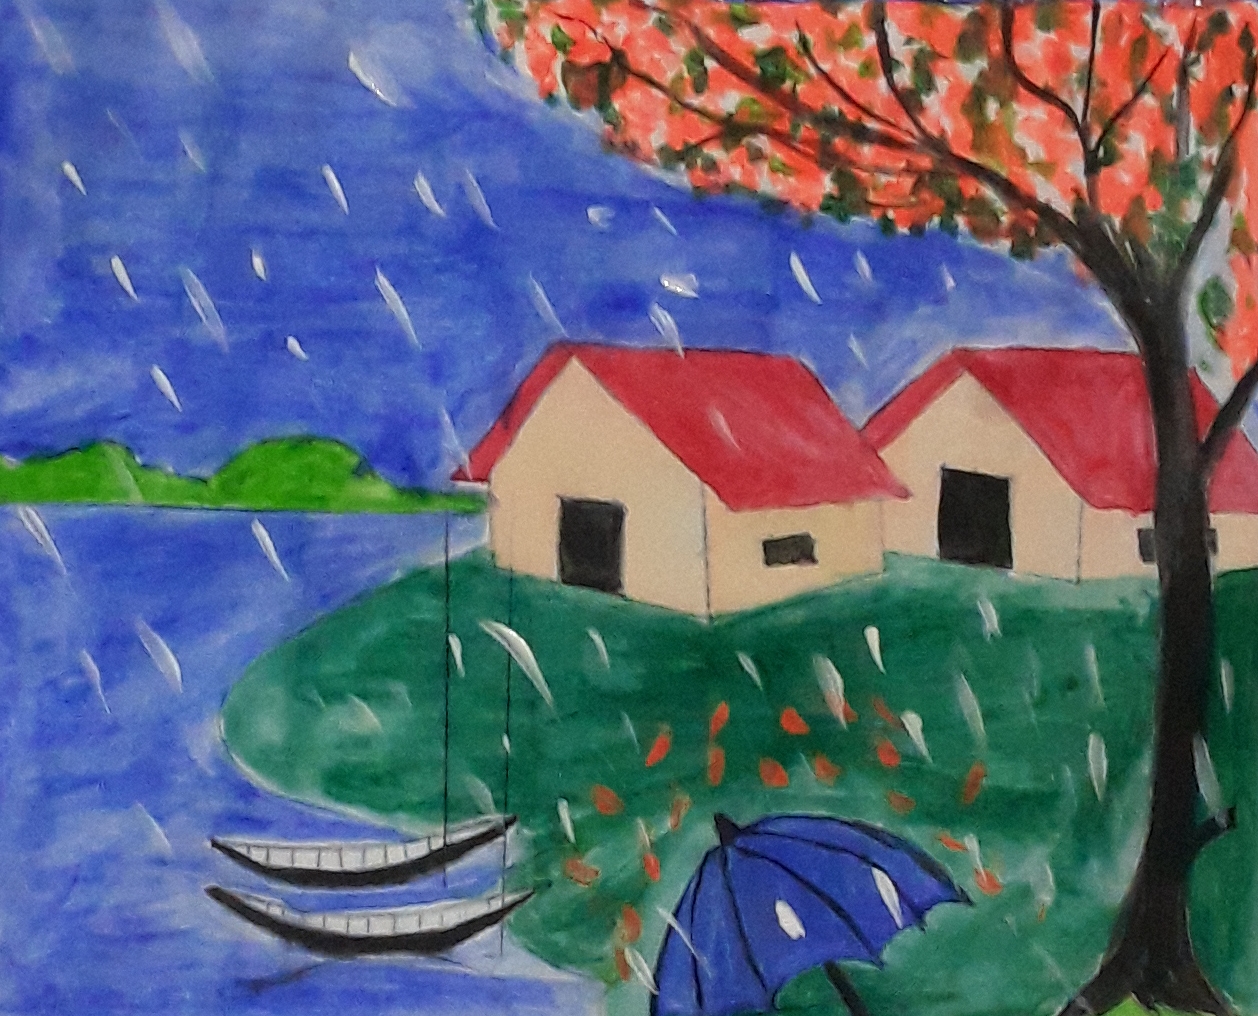 Monsoon Theme Children's Drawing Tutorials - Kiddingly